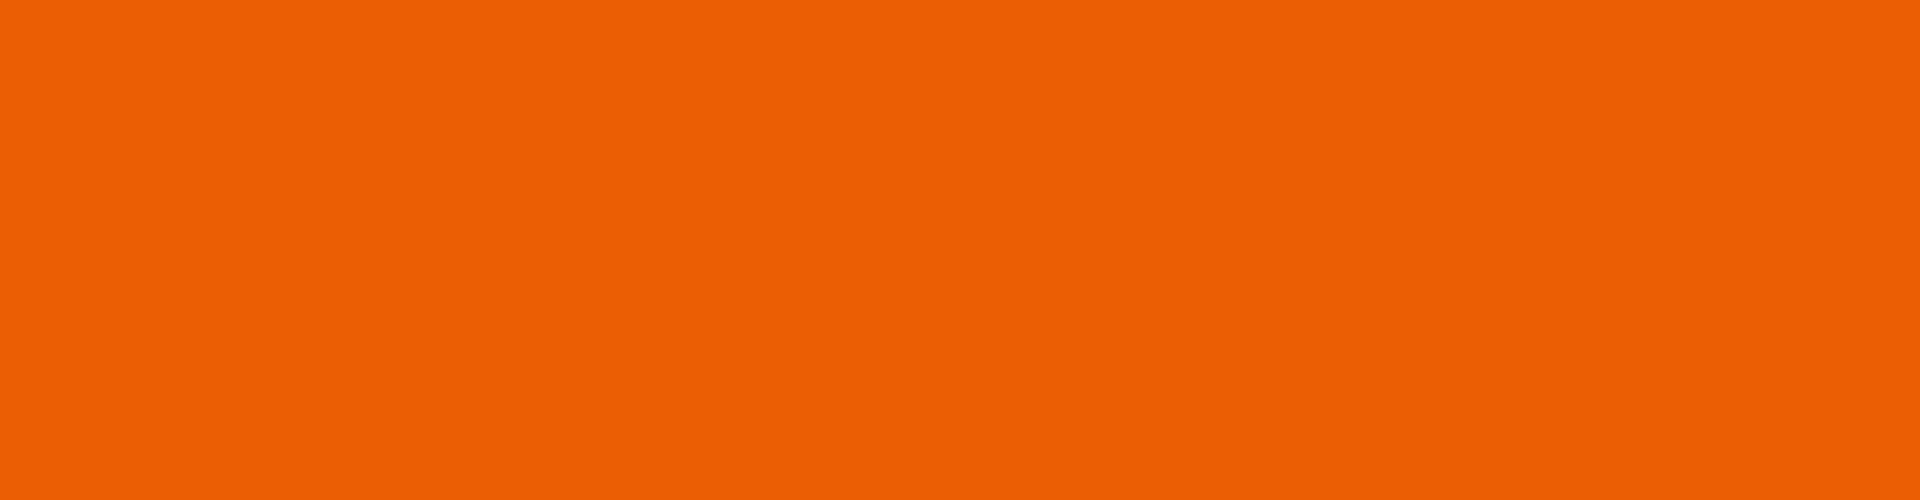 Orange Farbfläche